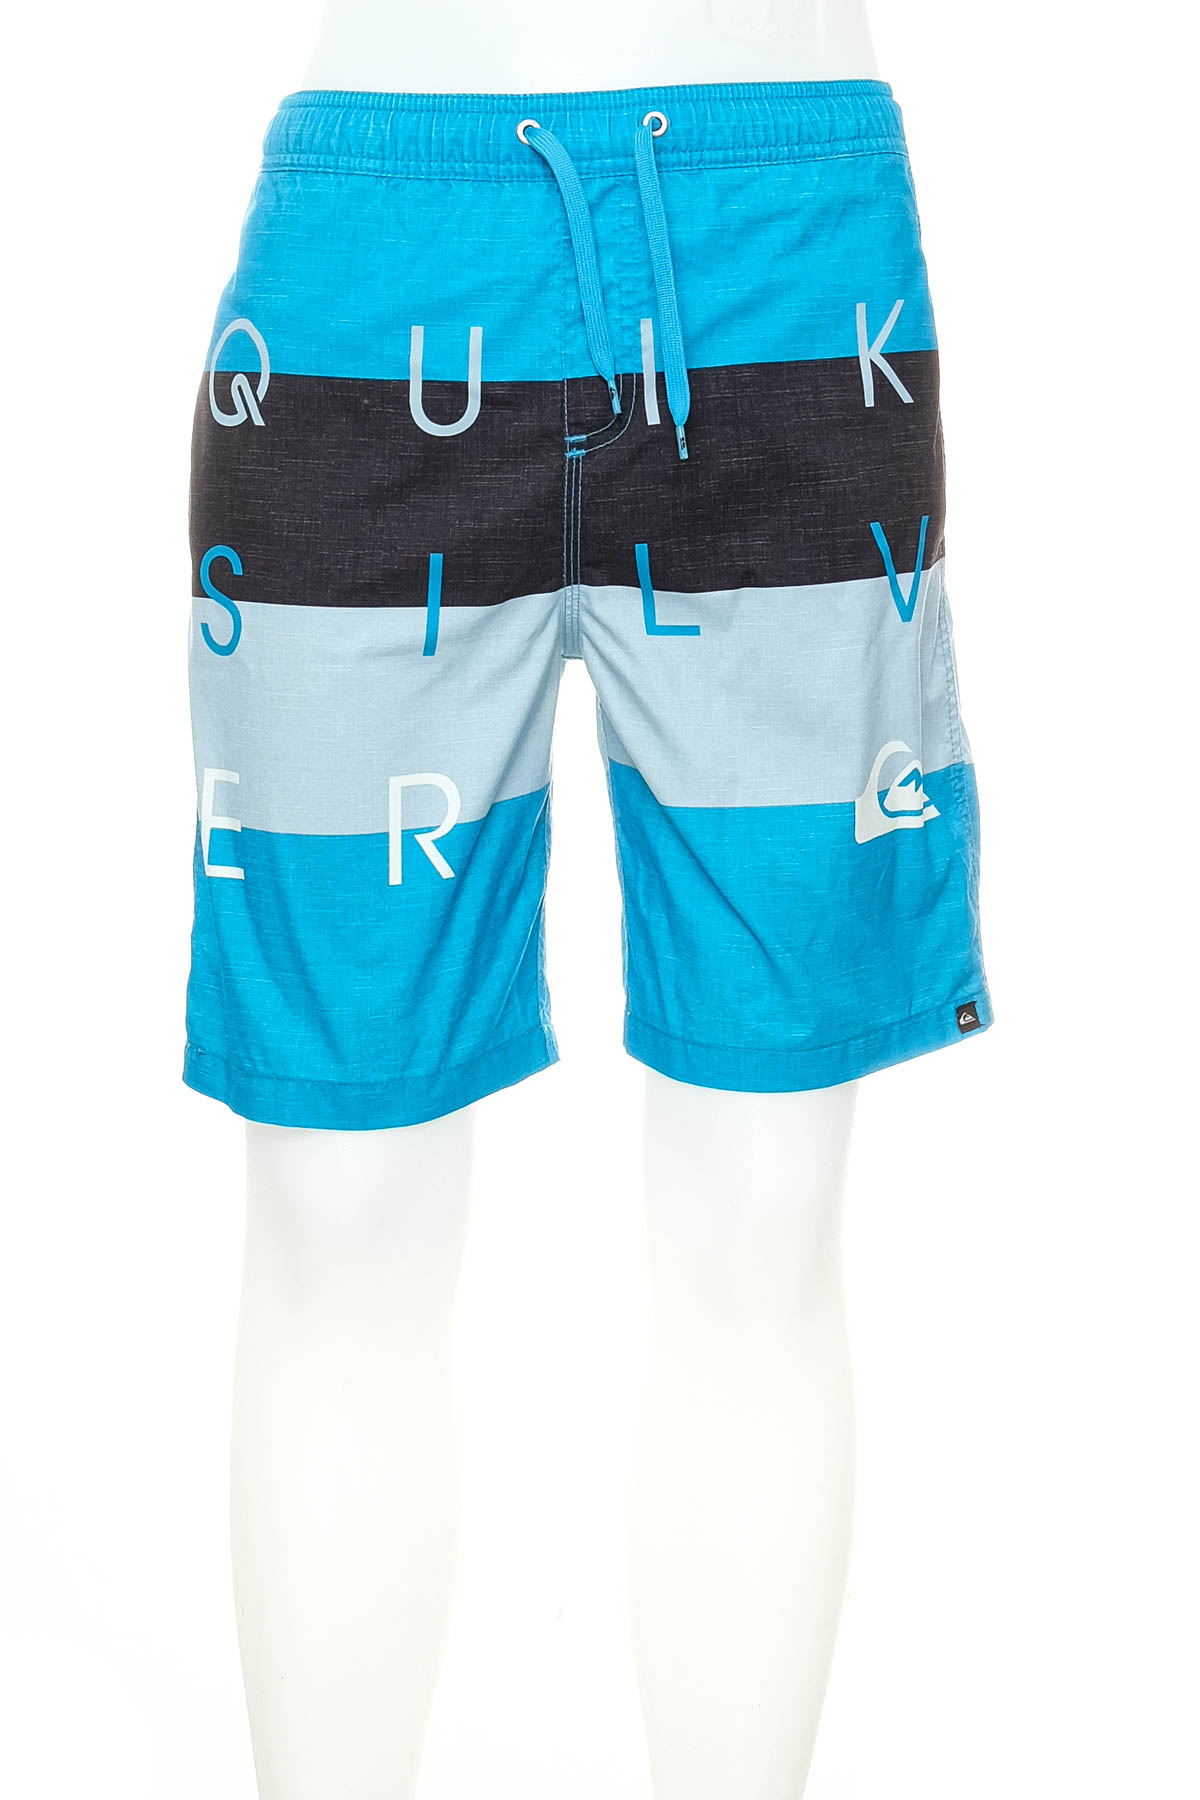 Men's shorts - Quiksilver - 0